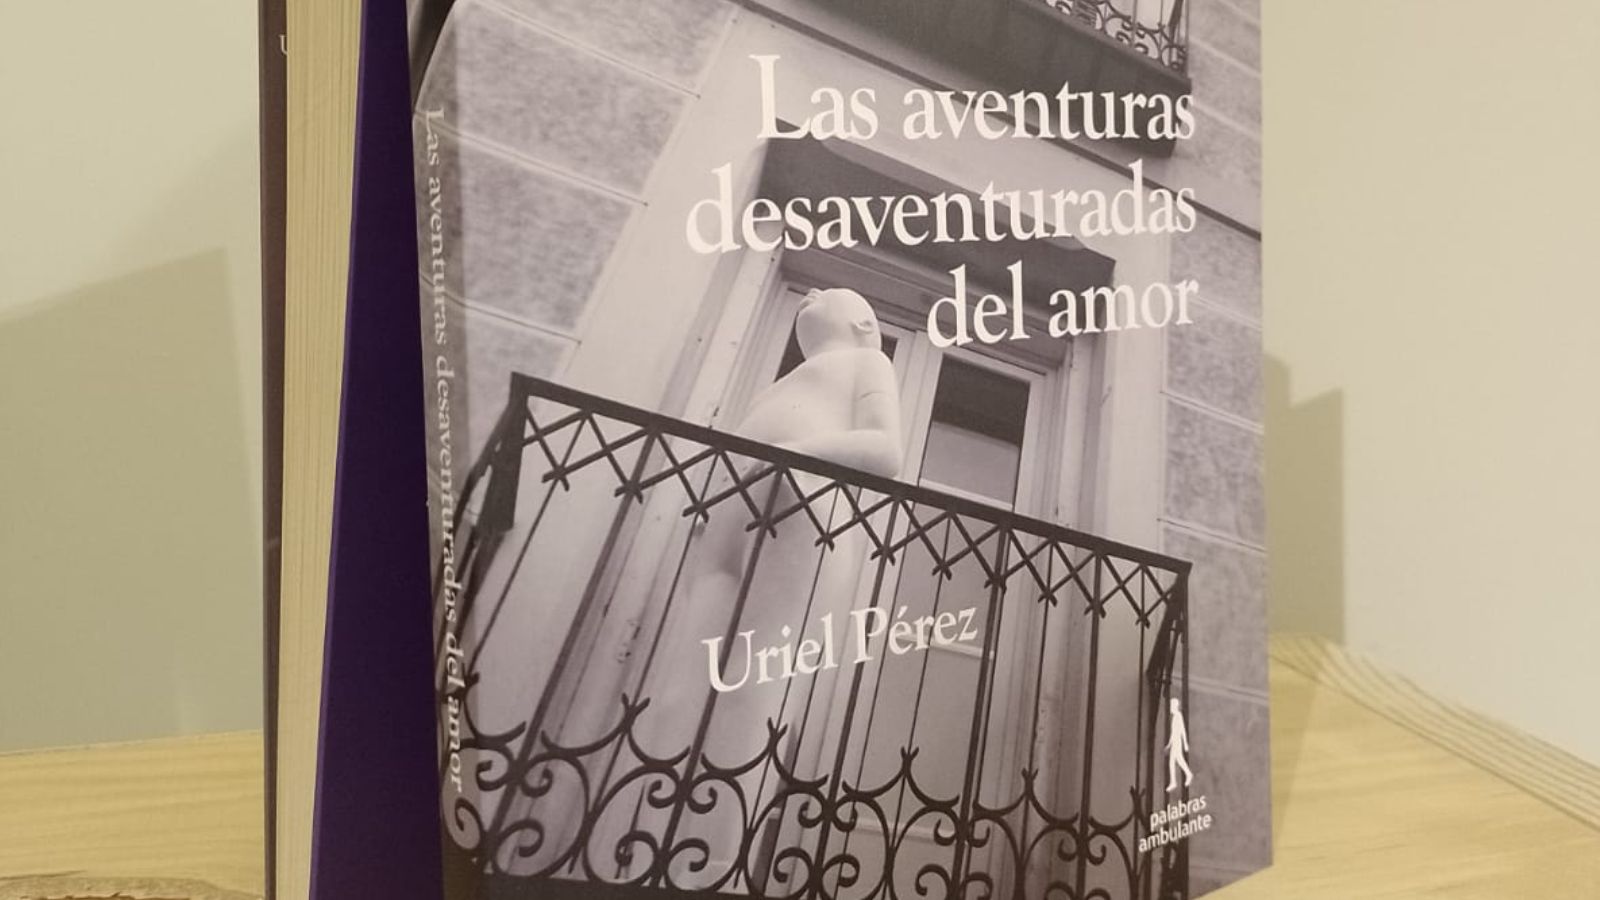 Uriel Pérez: Las aventuras desaventuradas del amor